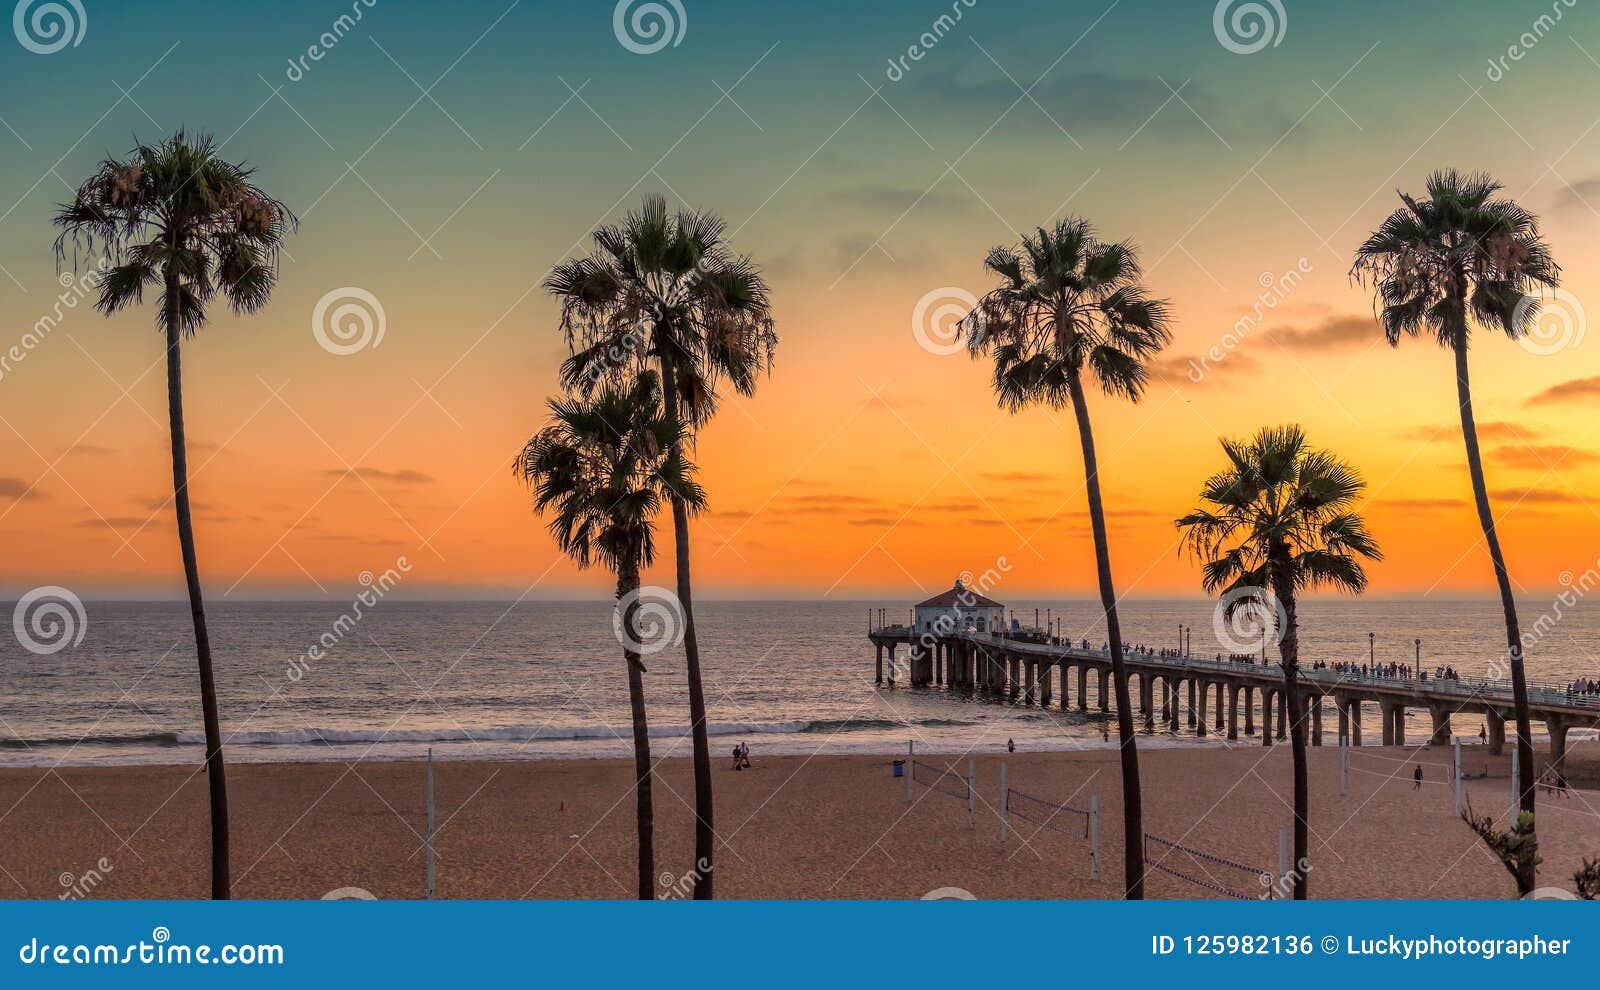 manhattan beach at sunset in california